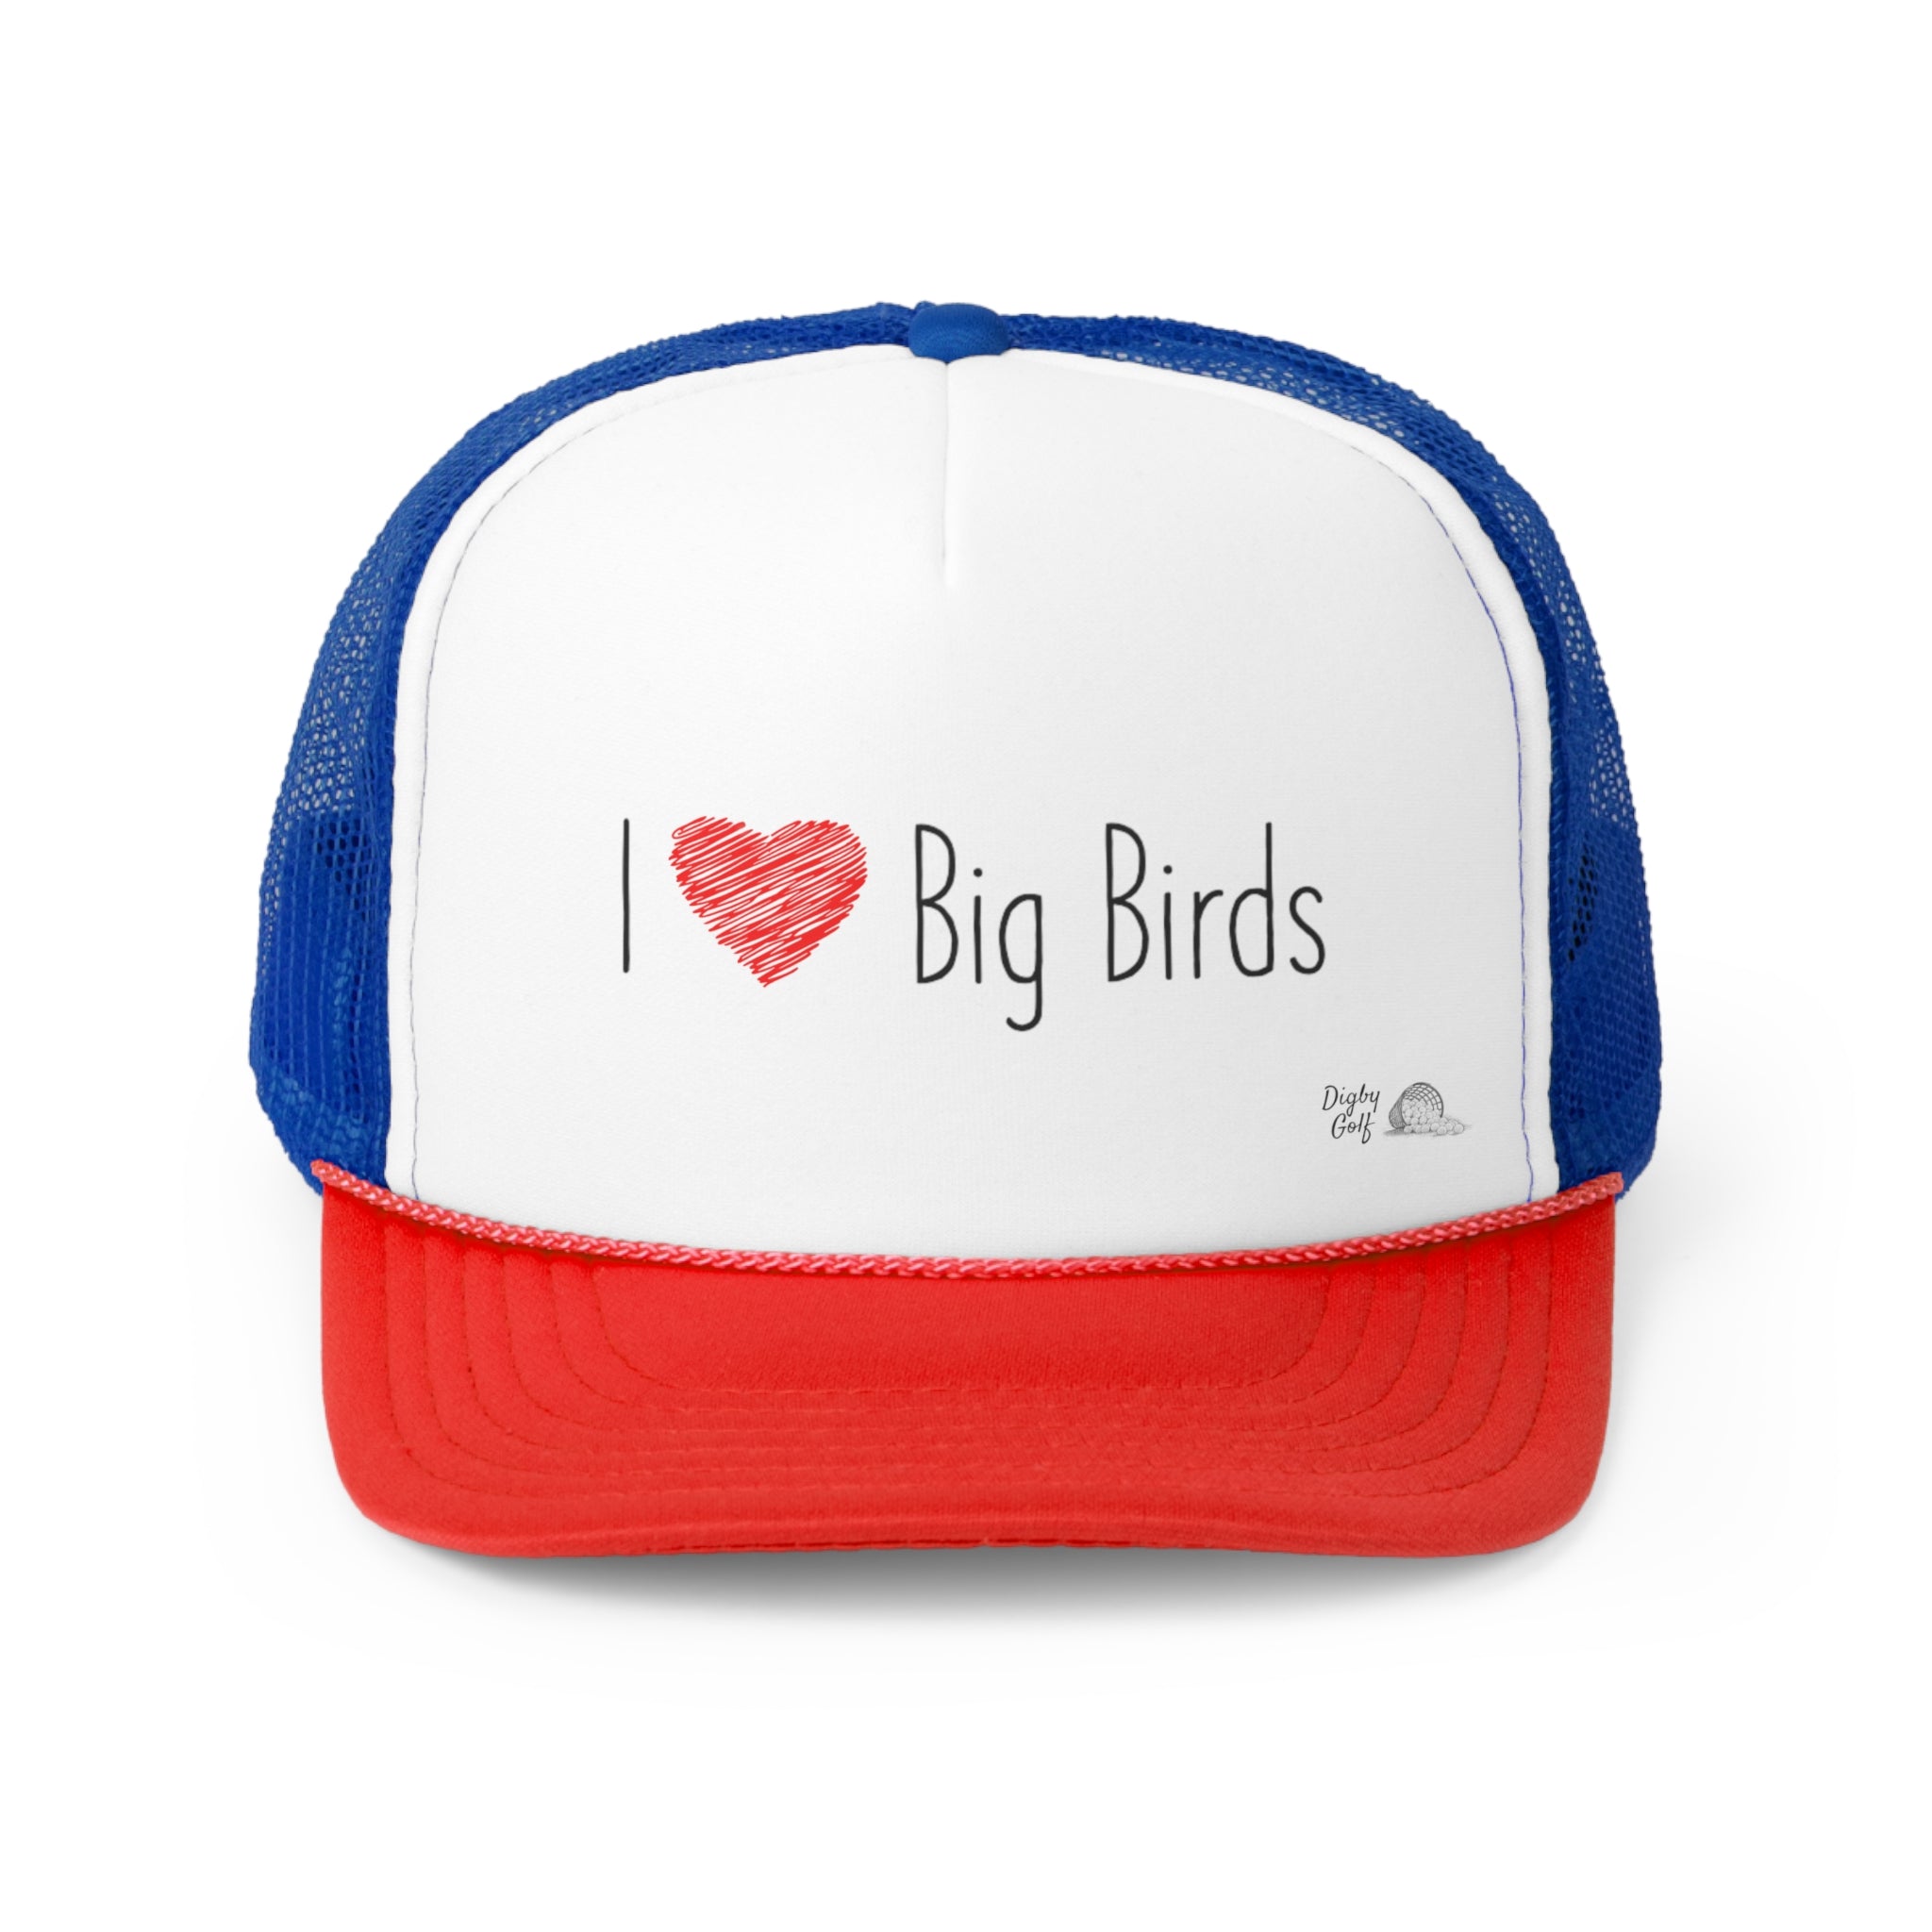 I Love Big Birds Digby Golf Trucker Caps